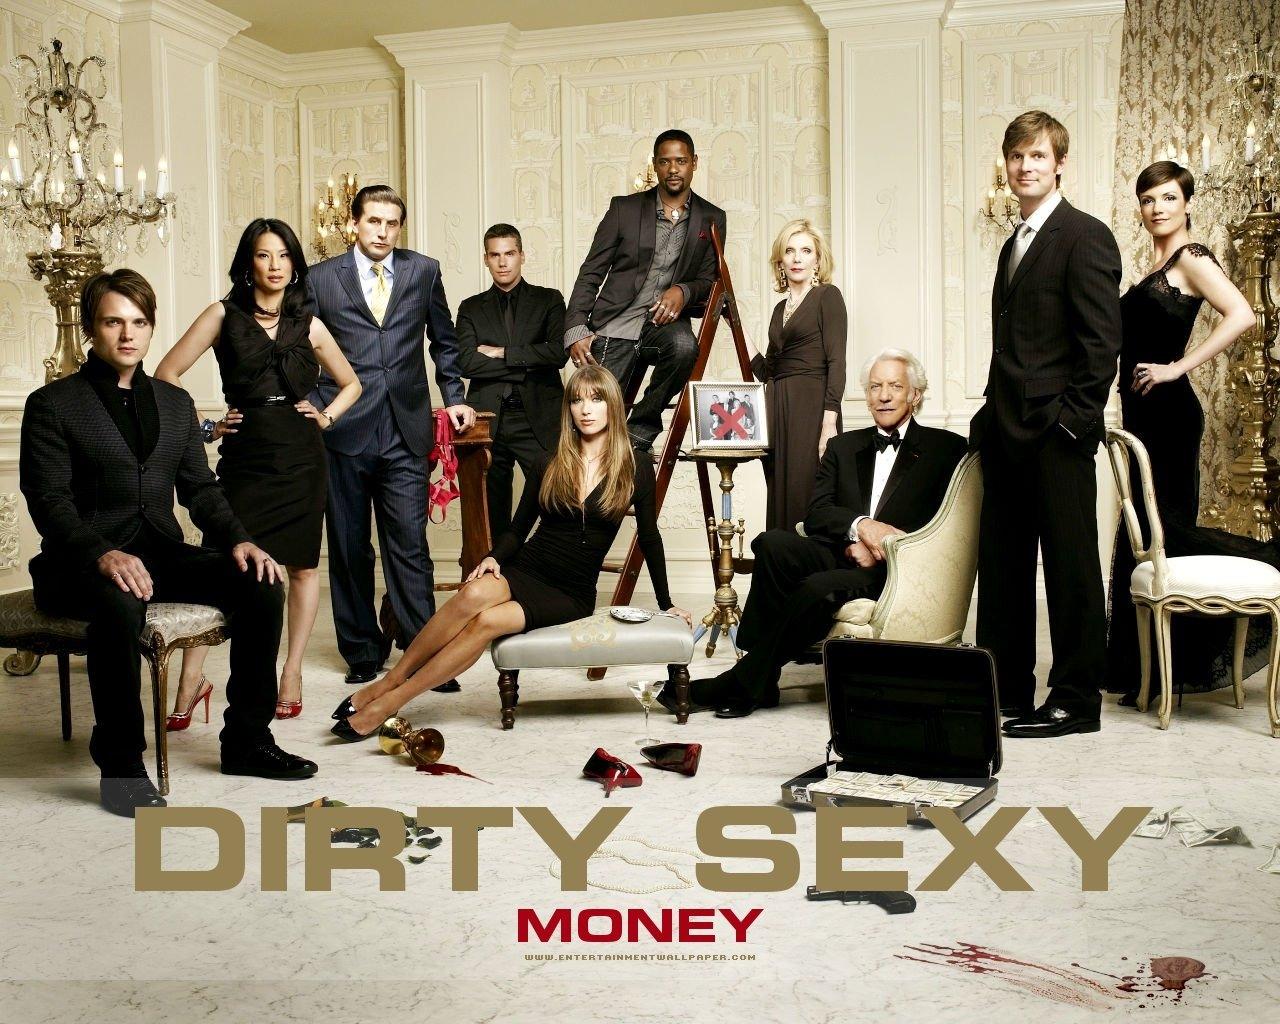 Fondos de Pantalla Dirty Sexy Money Película descargar imagenes